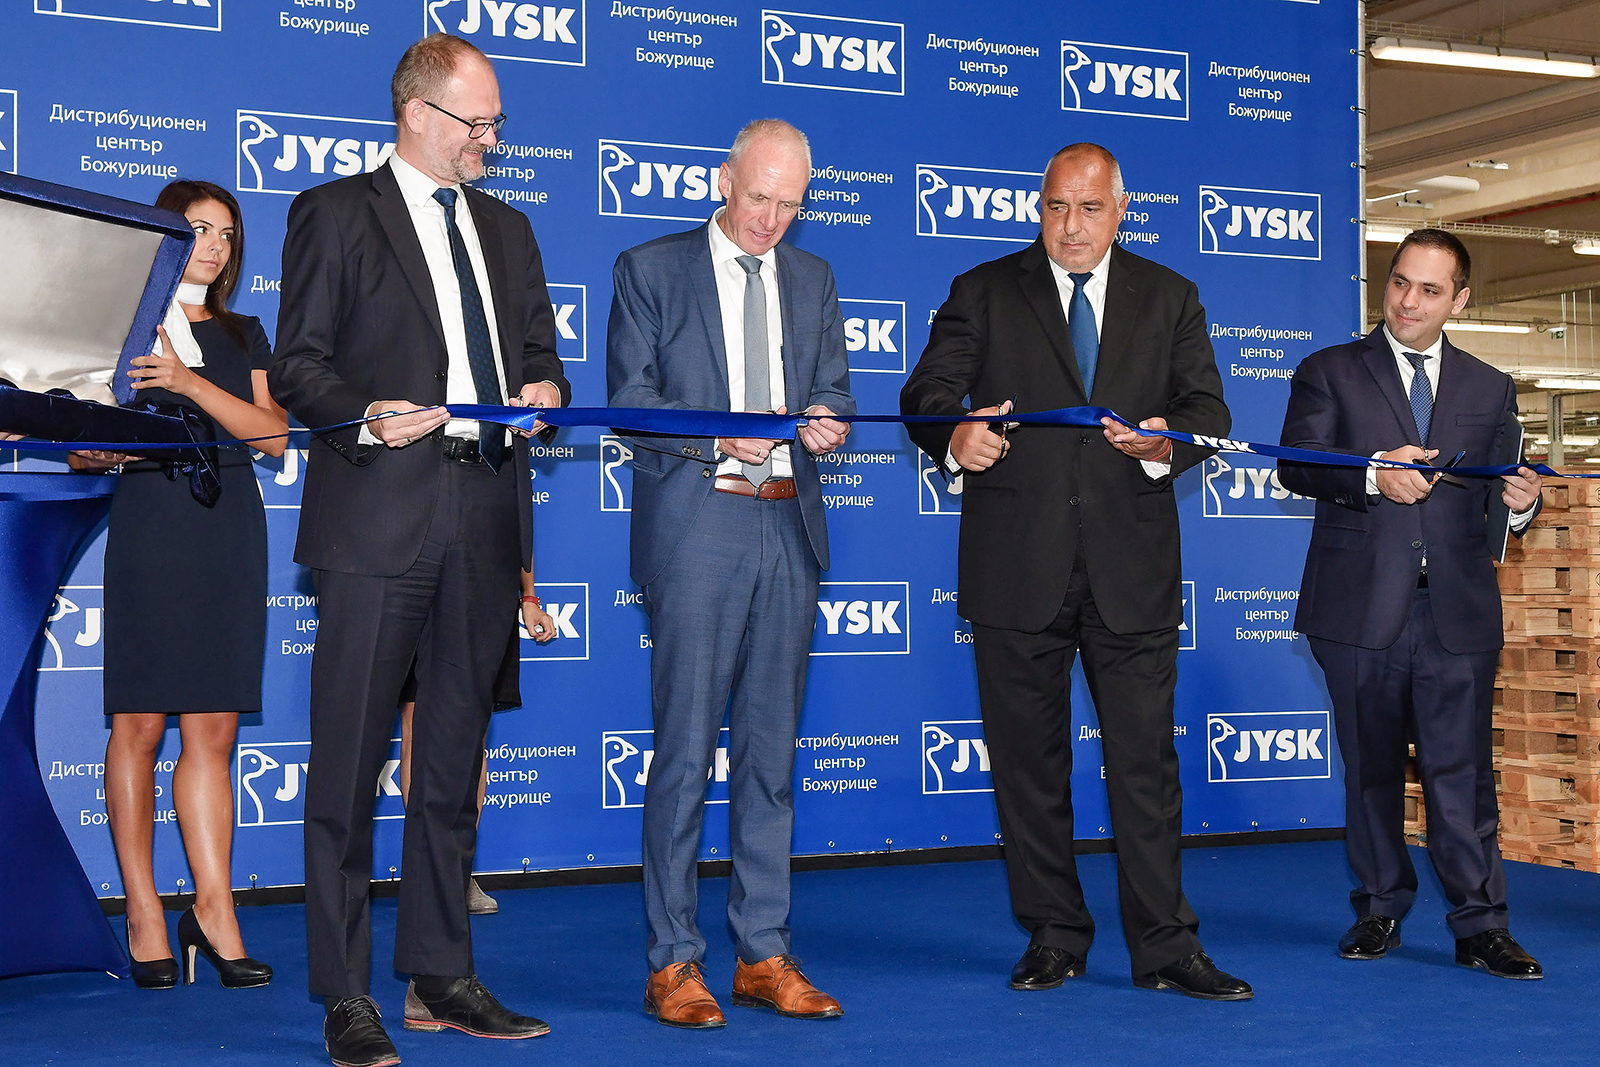 JYSK Sofia inaugurated